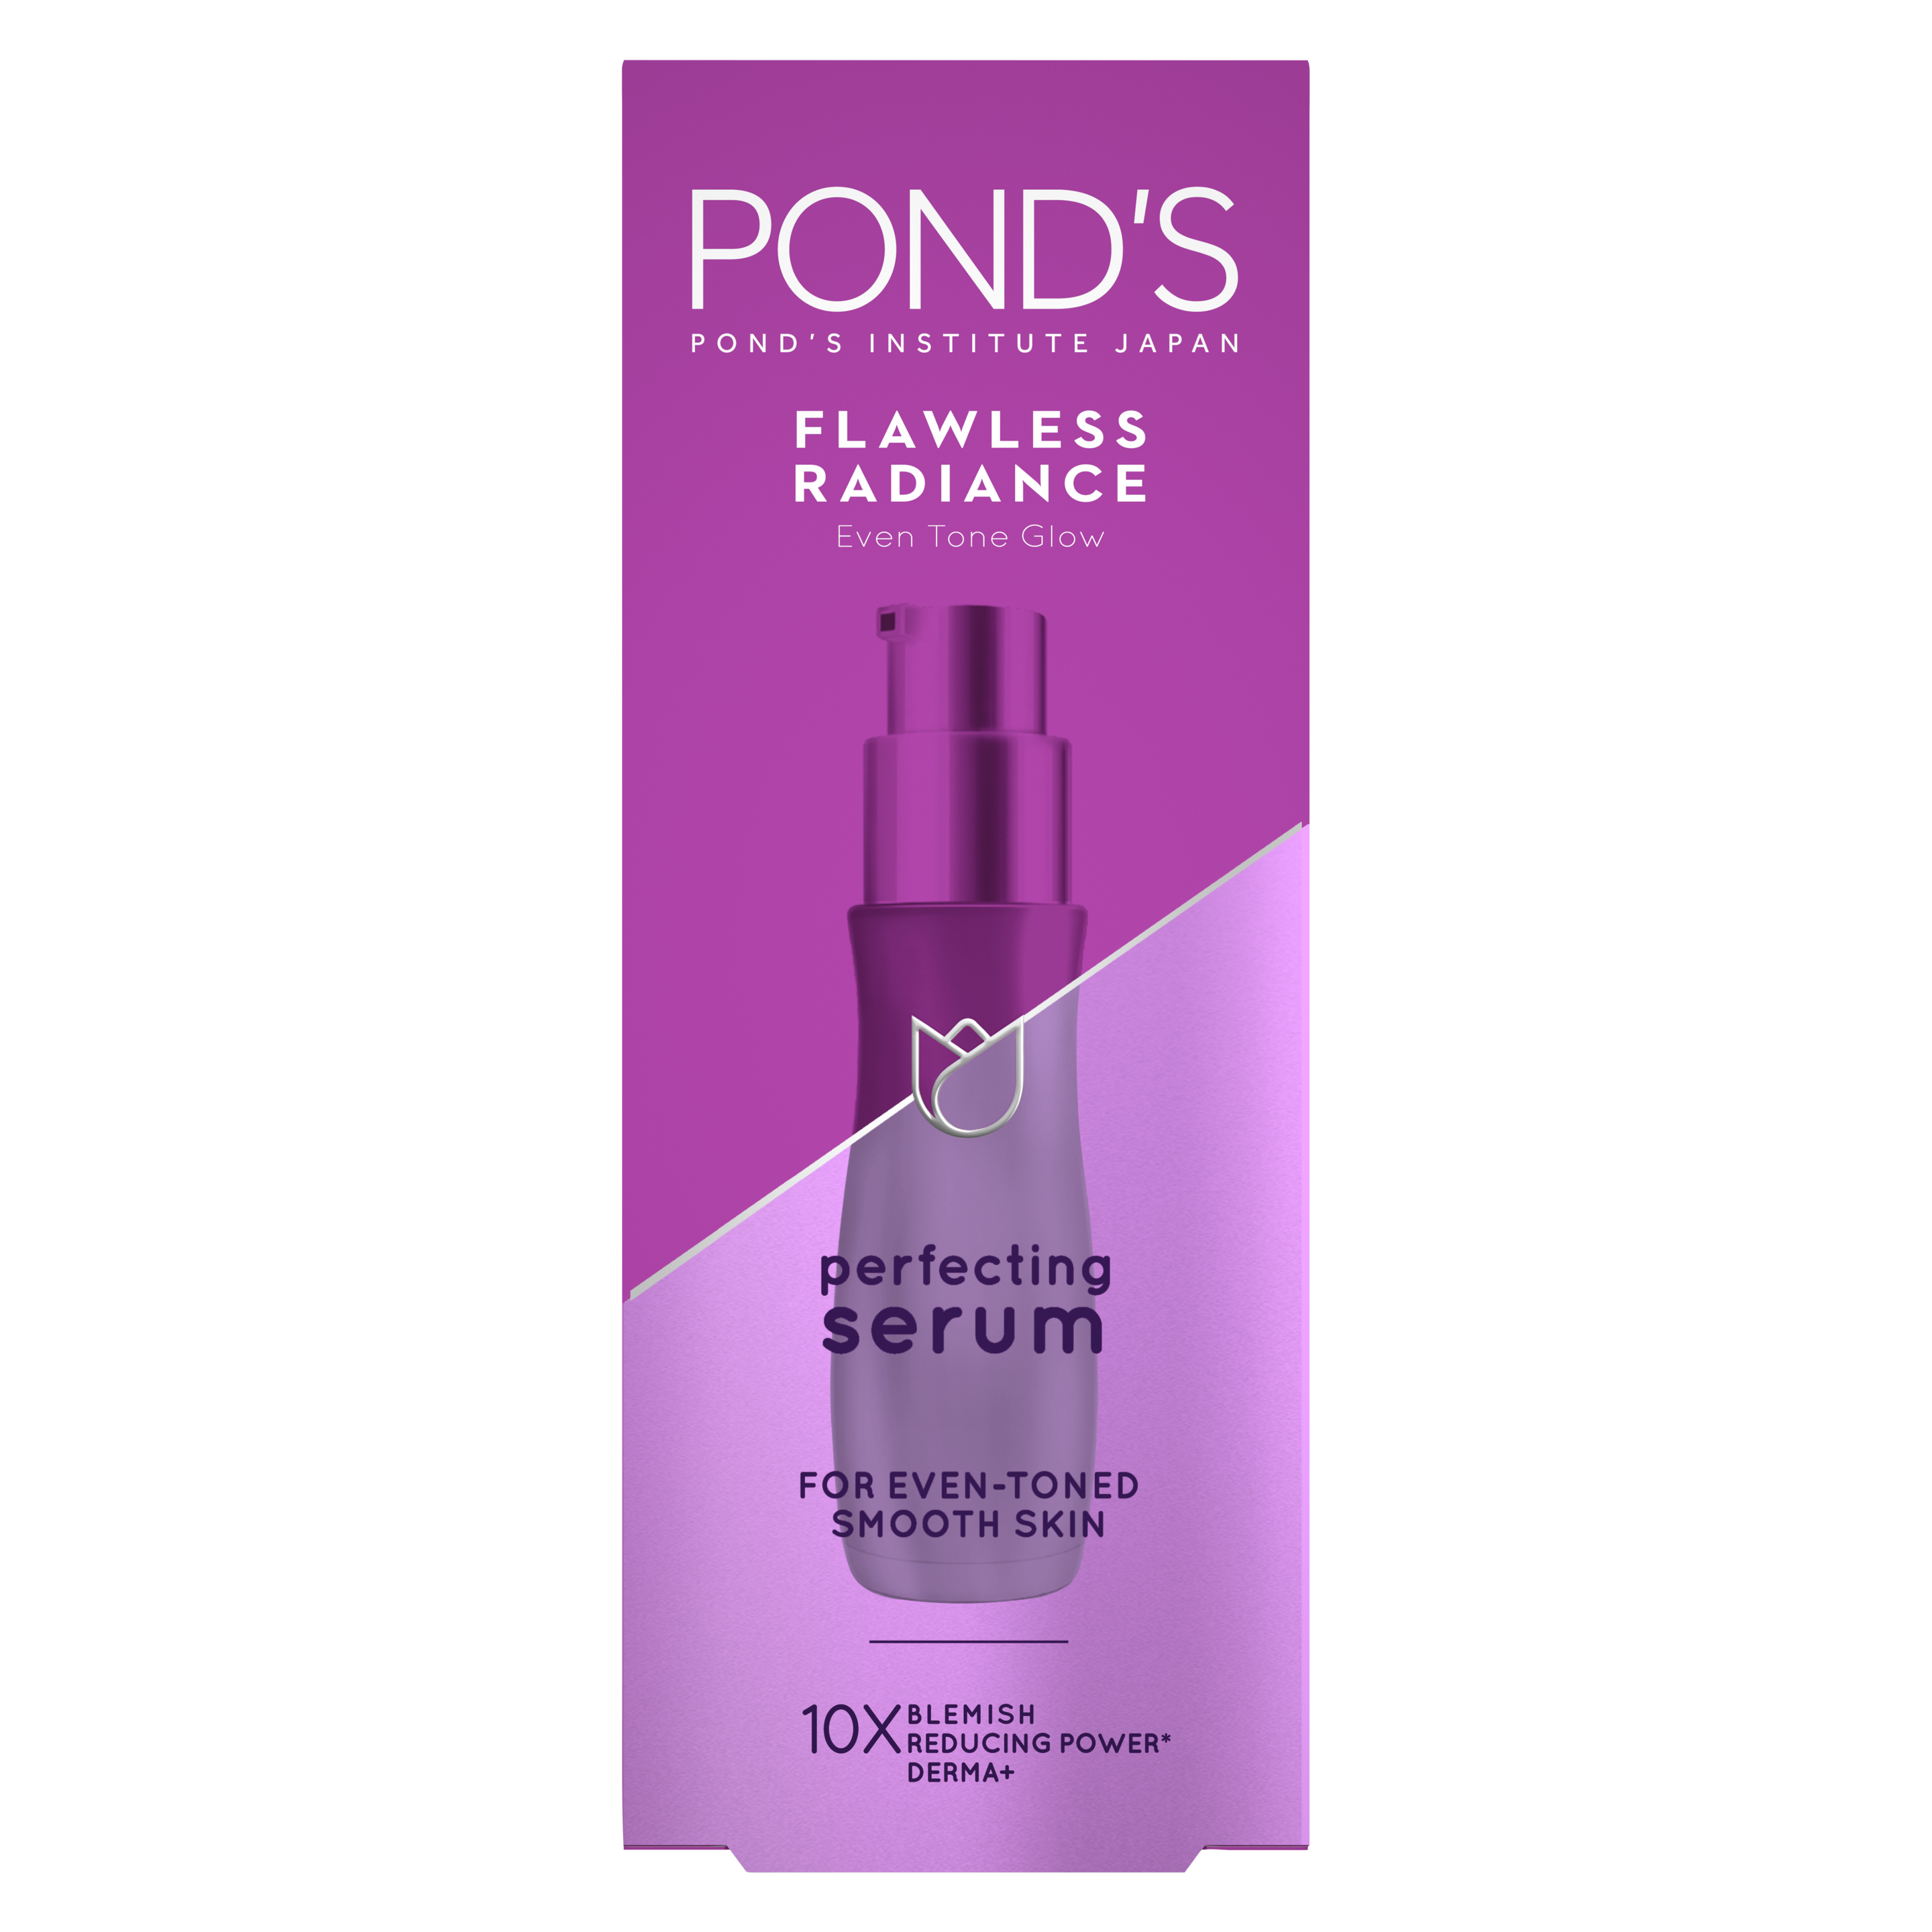 POND'S Flawless Radiance Derma + Perfecting Serum